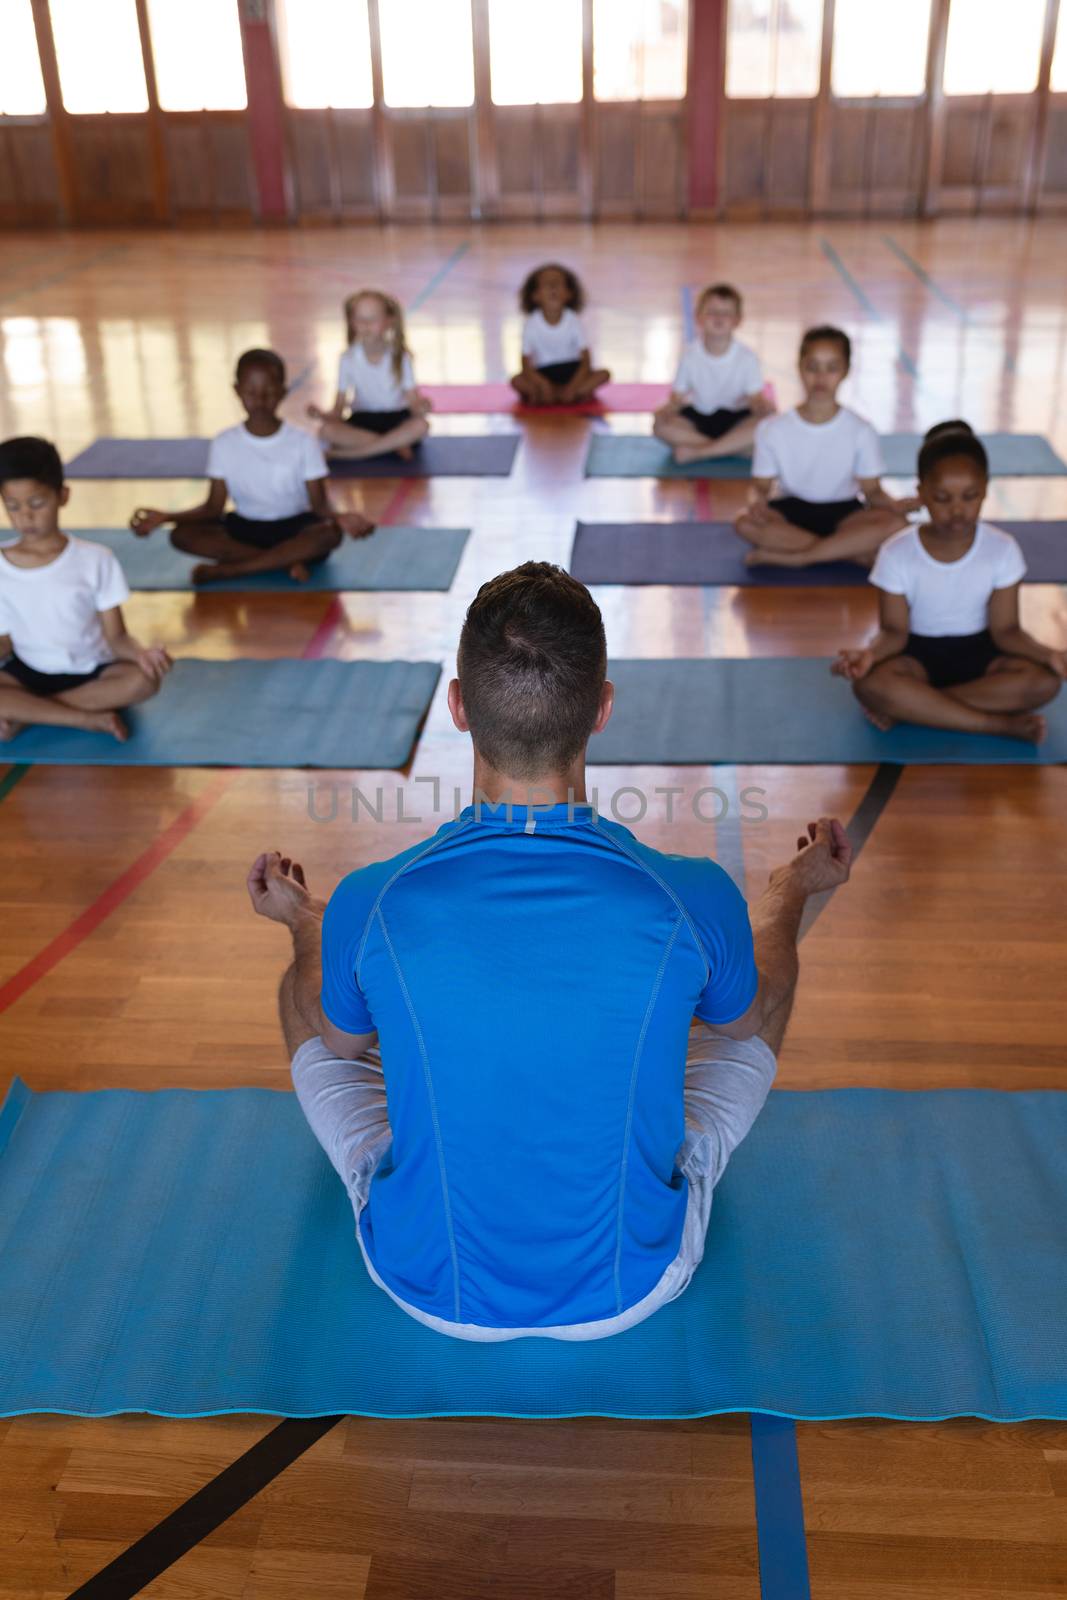 Yoga teacher teaching yoga to school kids in school by Wavebreakmedia